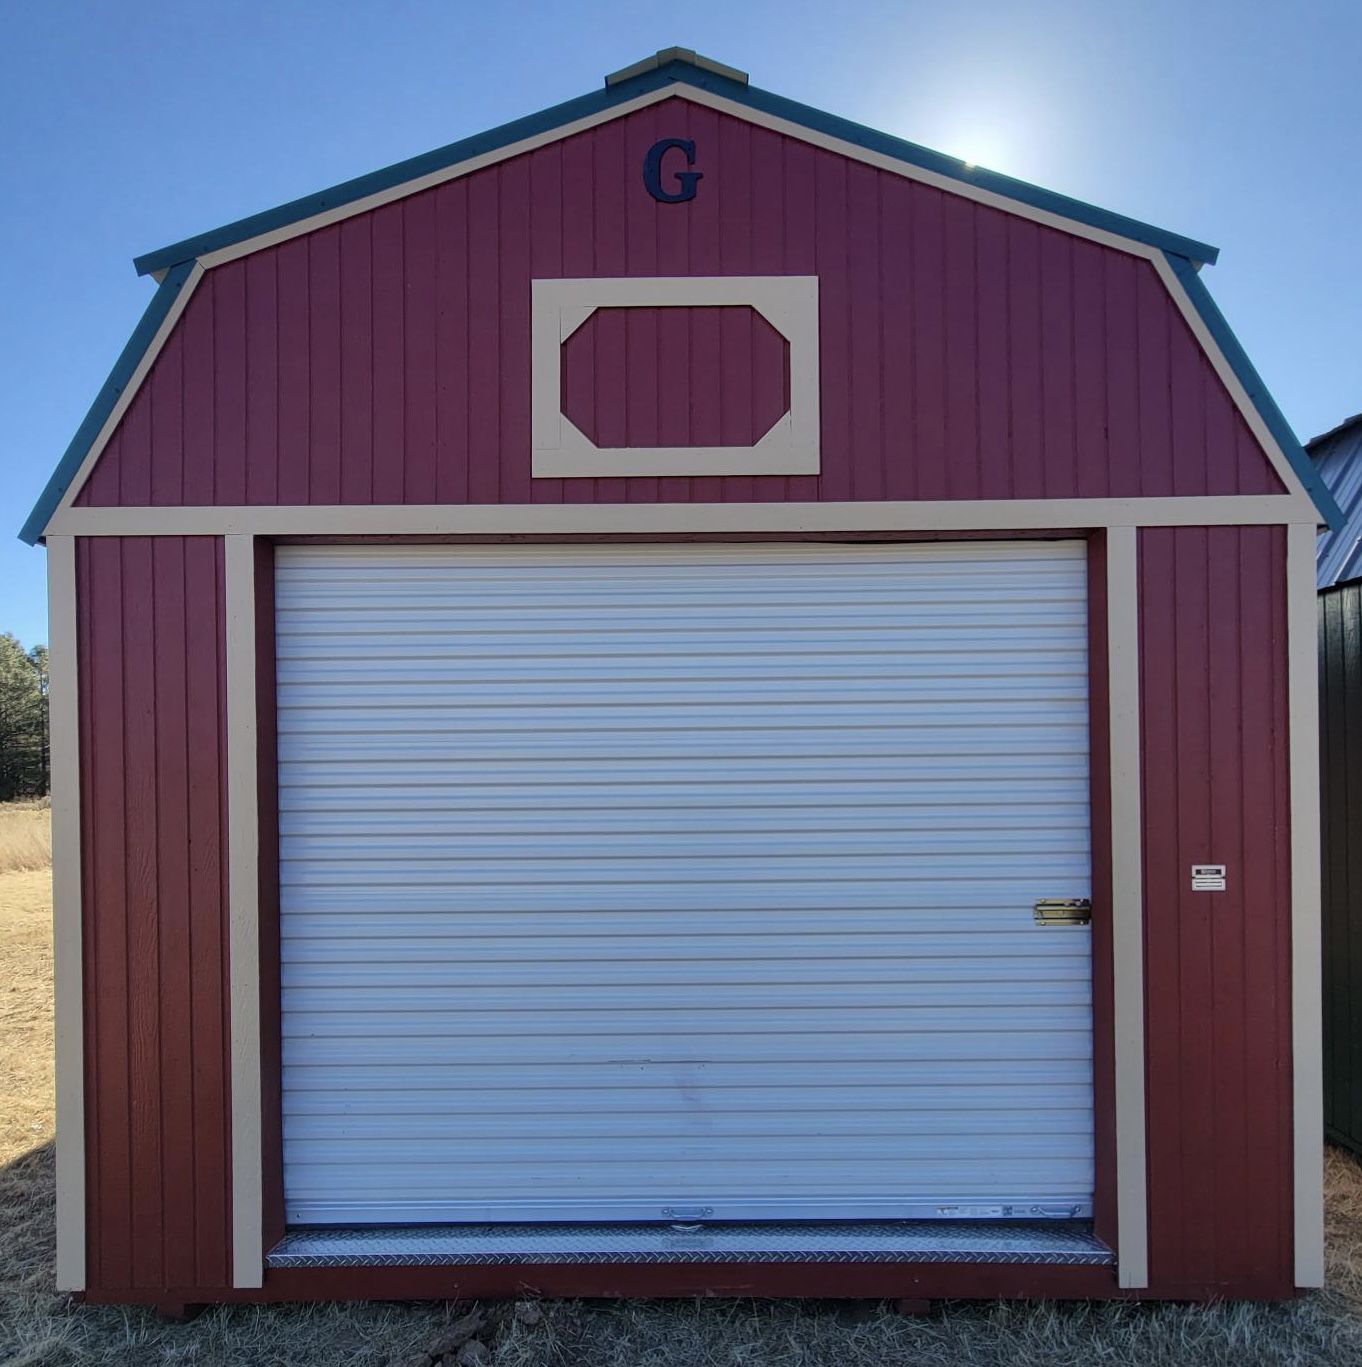 Graceland Portable Buildings Shed Gal Lofted Barn Garage Storage 